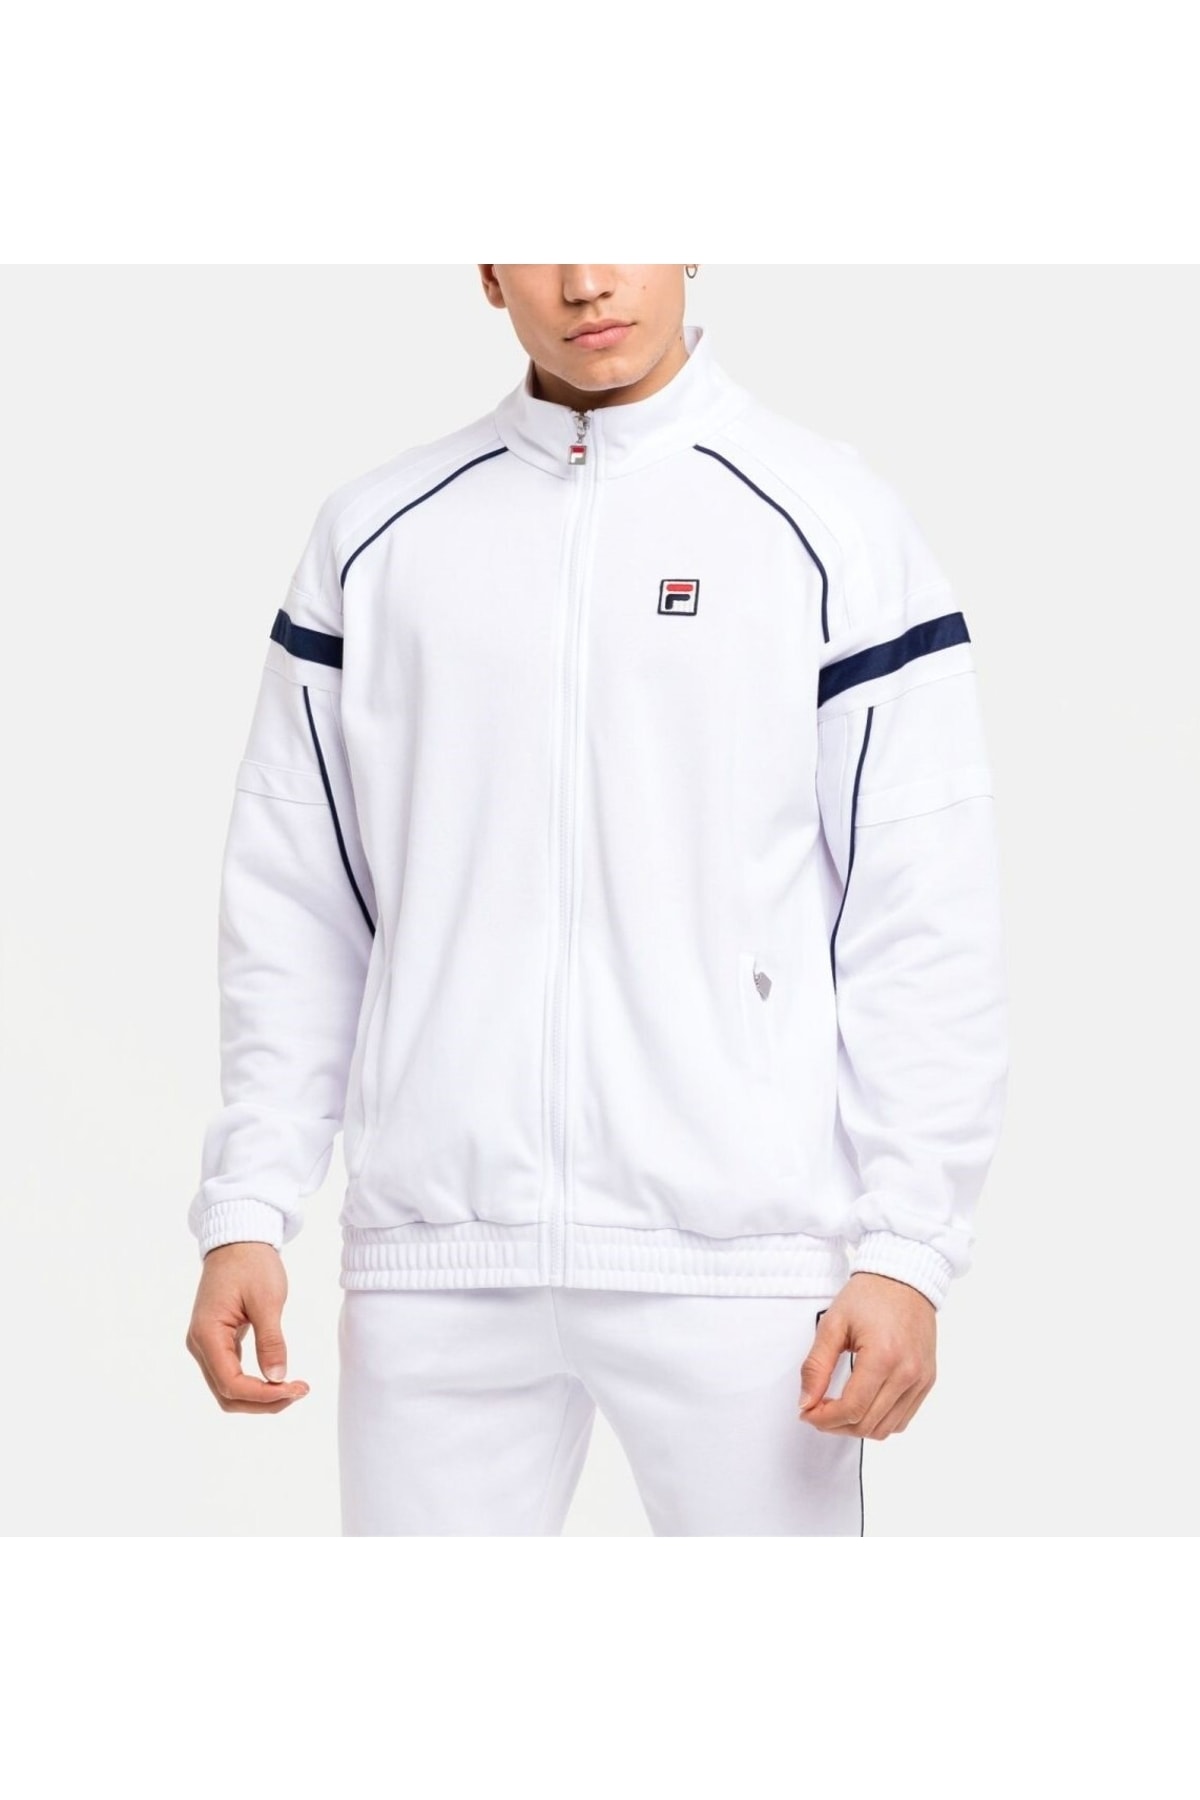 Fila Sweatshirt Weiß Regular Fit Fast ausverkauft